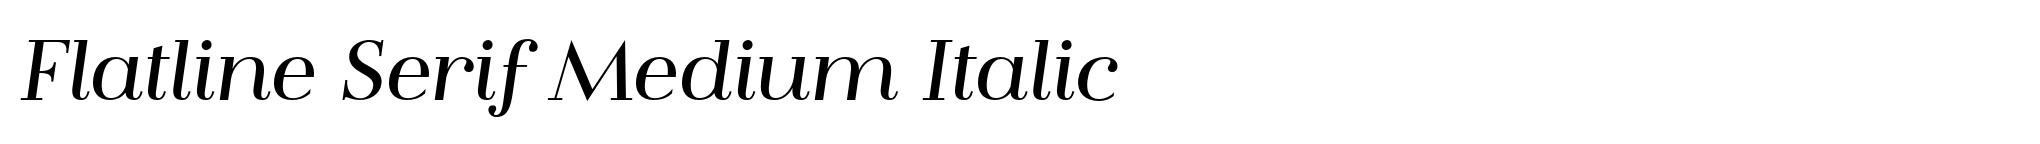 Flatline Serif Medium Italic image